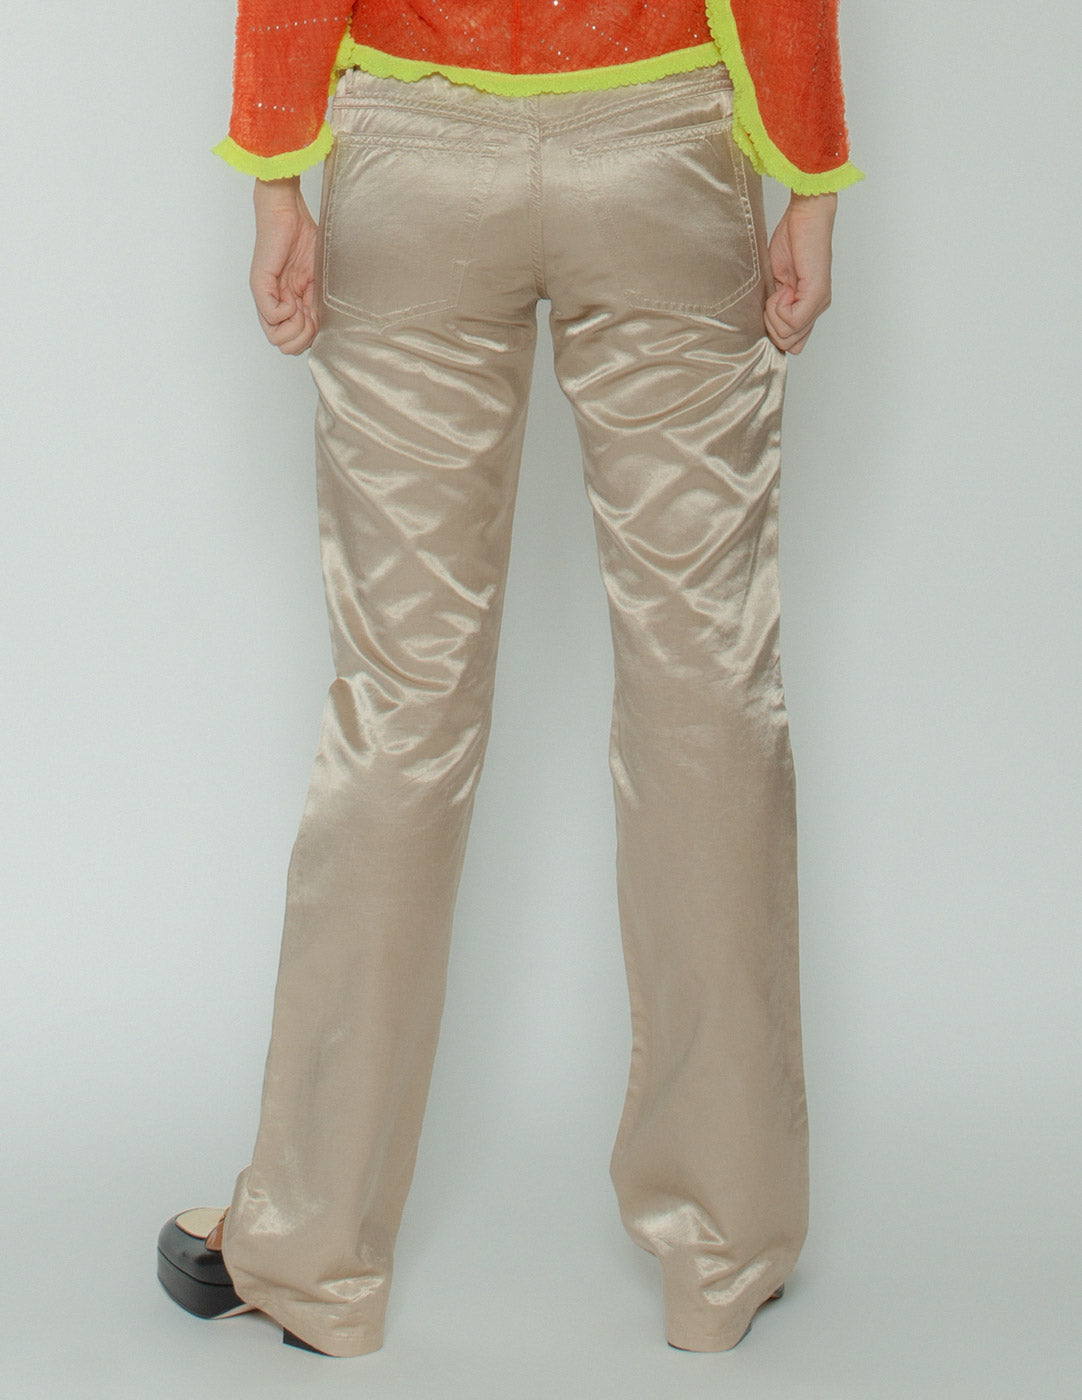 Miu Miu low-rise shimmer trousers back detail